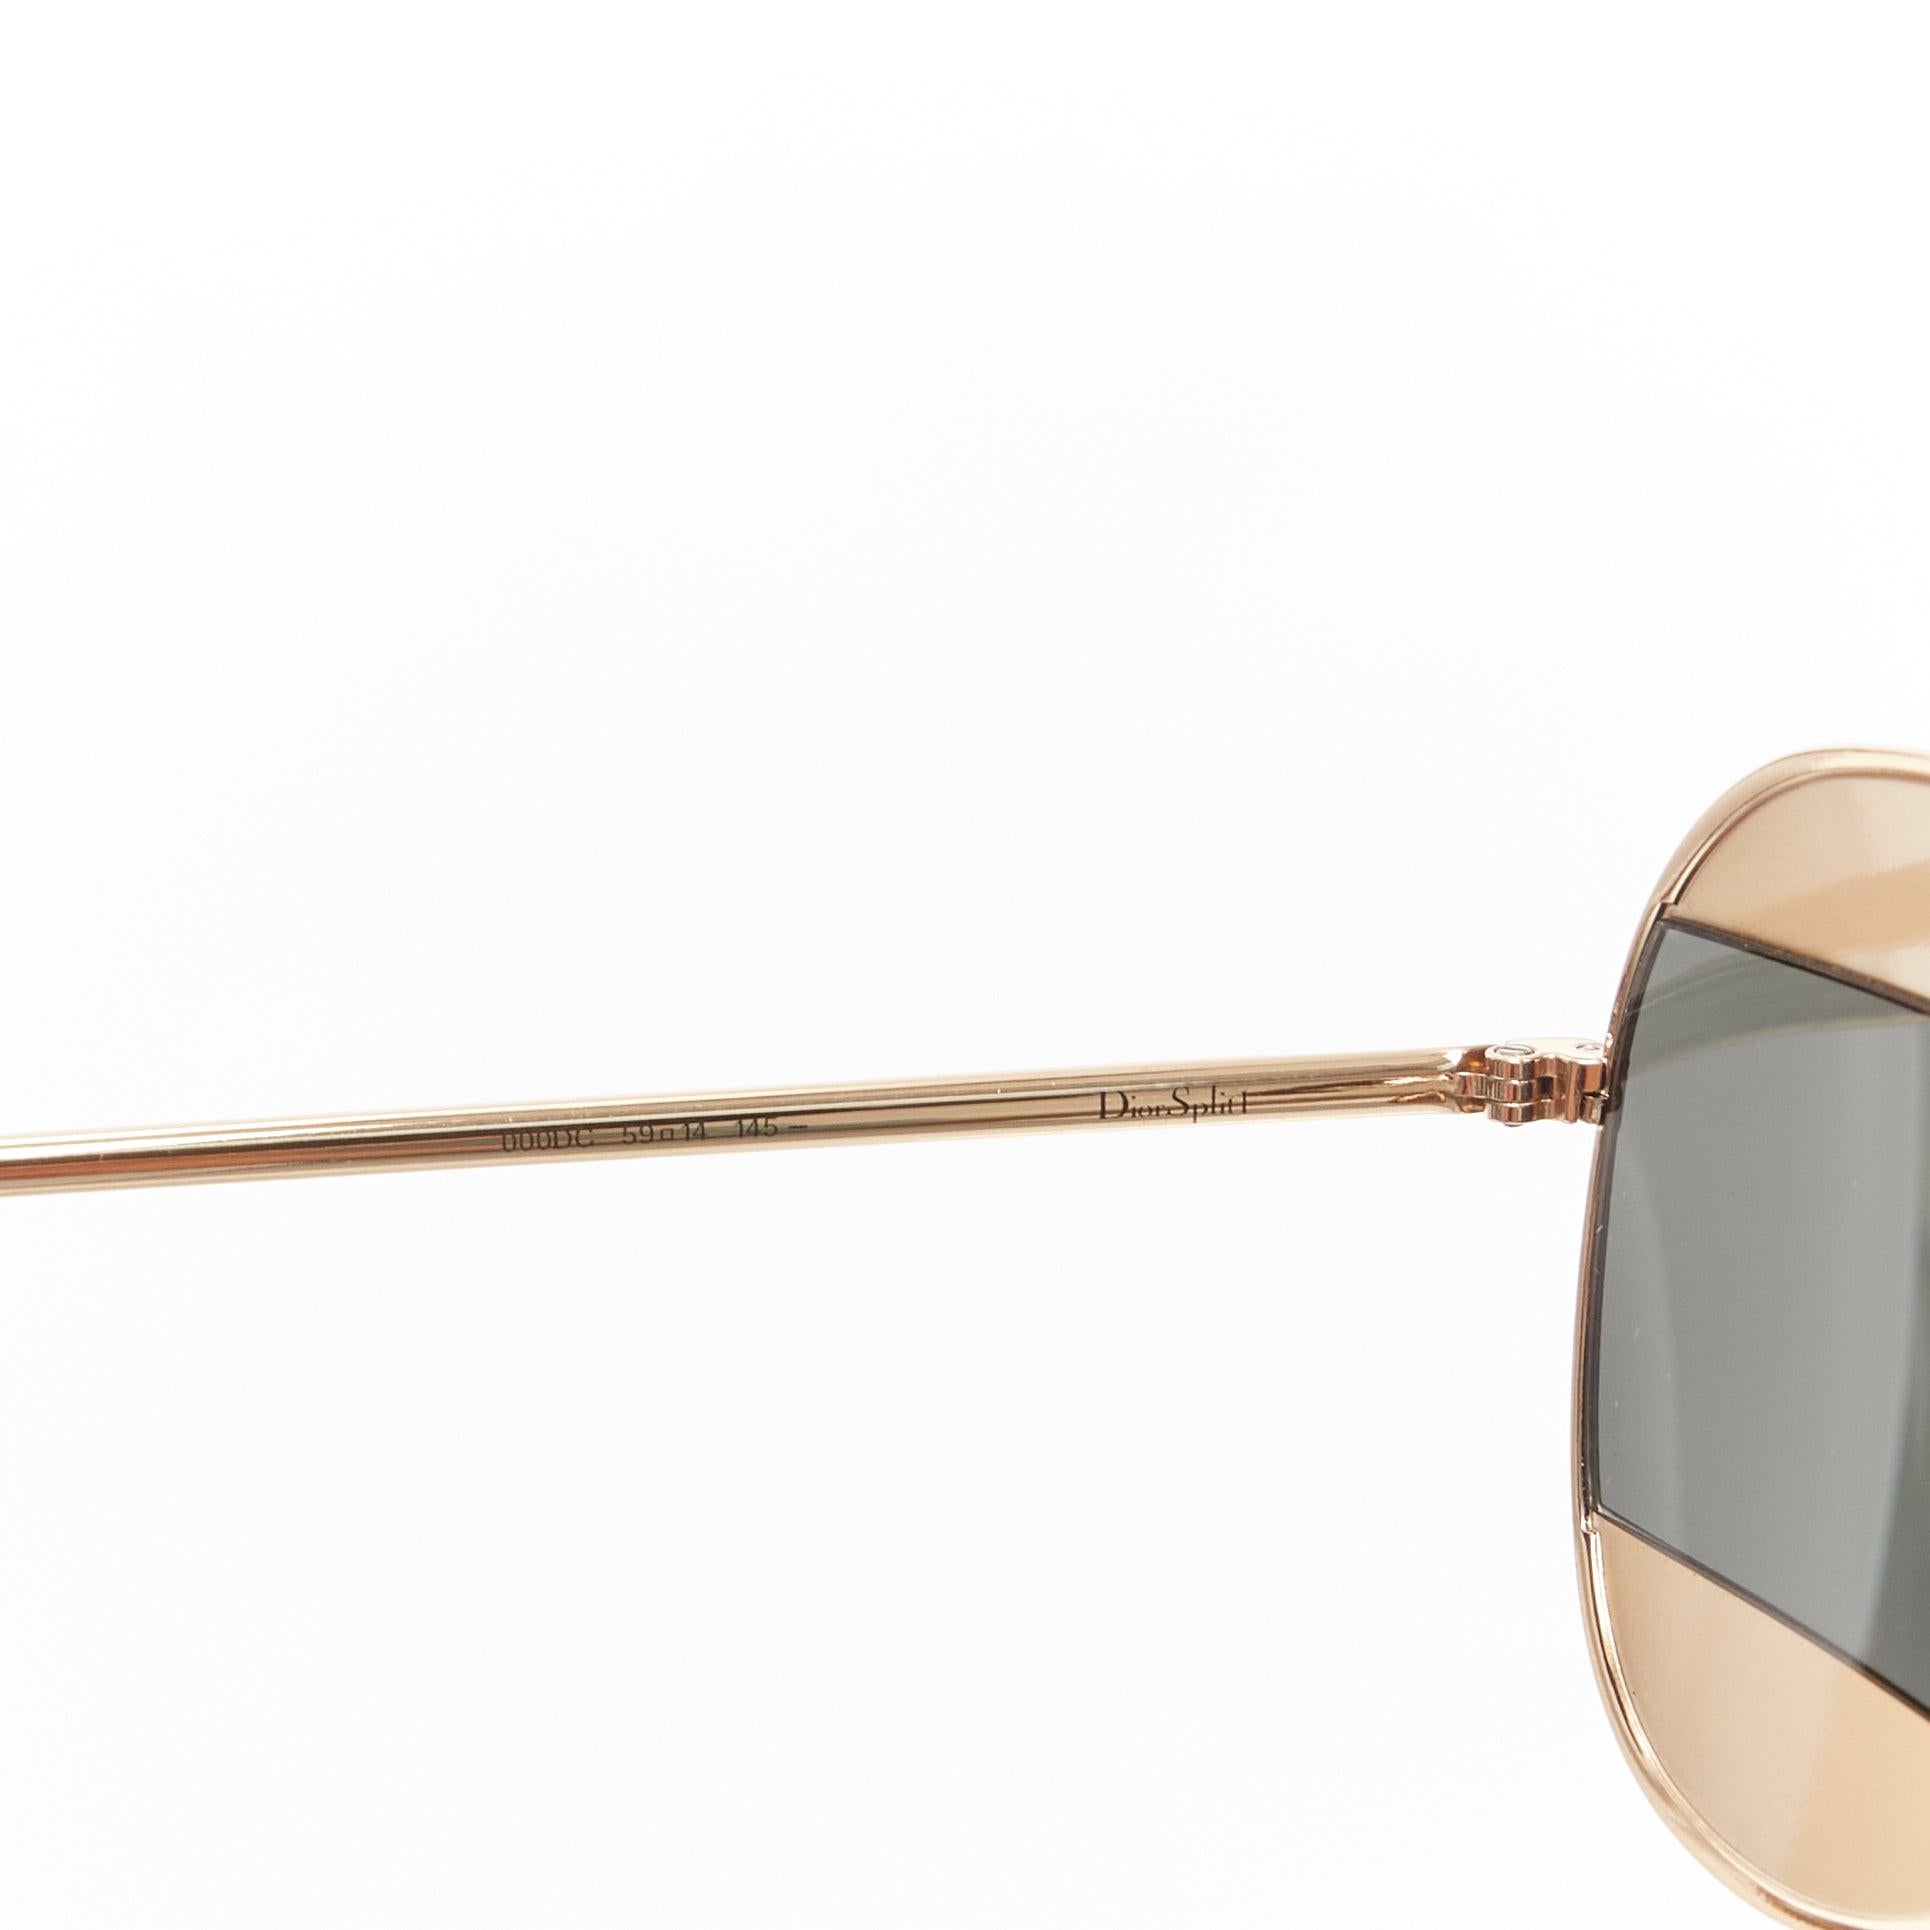 CHRISTINA DIOR Dior Split 1 gold metal mirrored silver aviator sunglasses 2